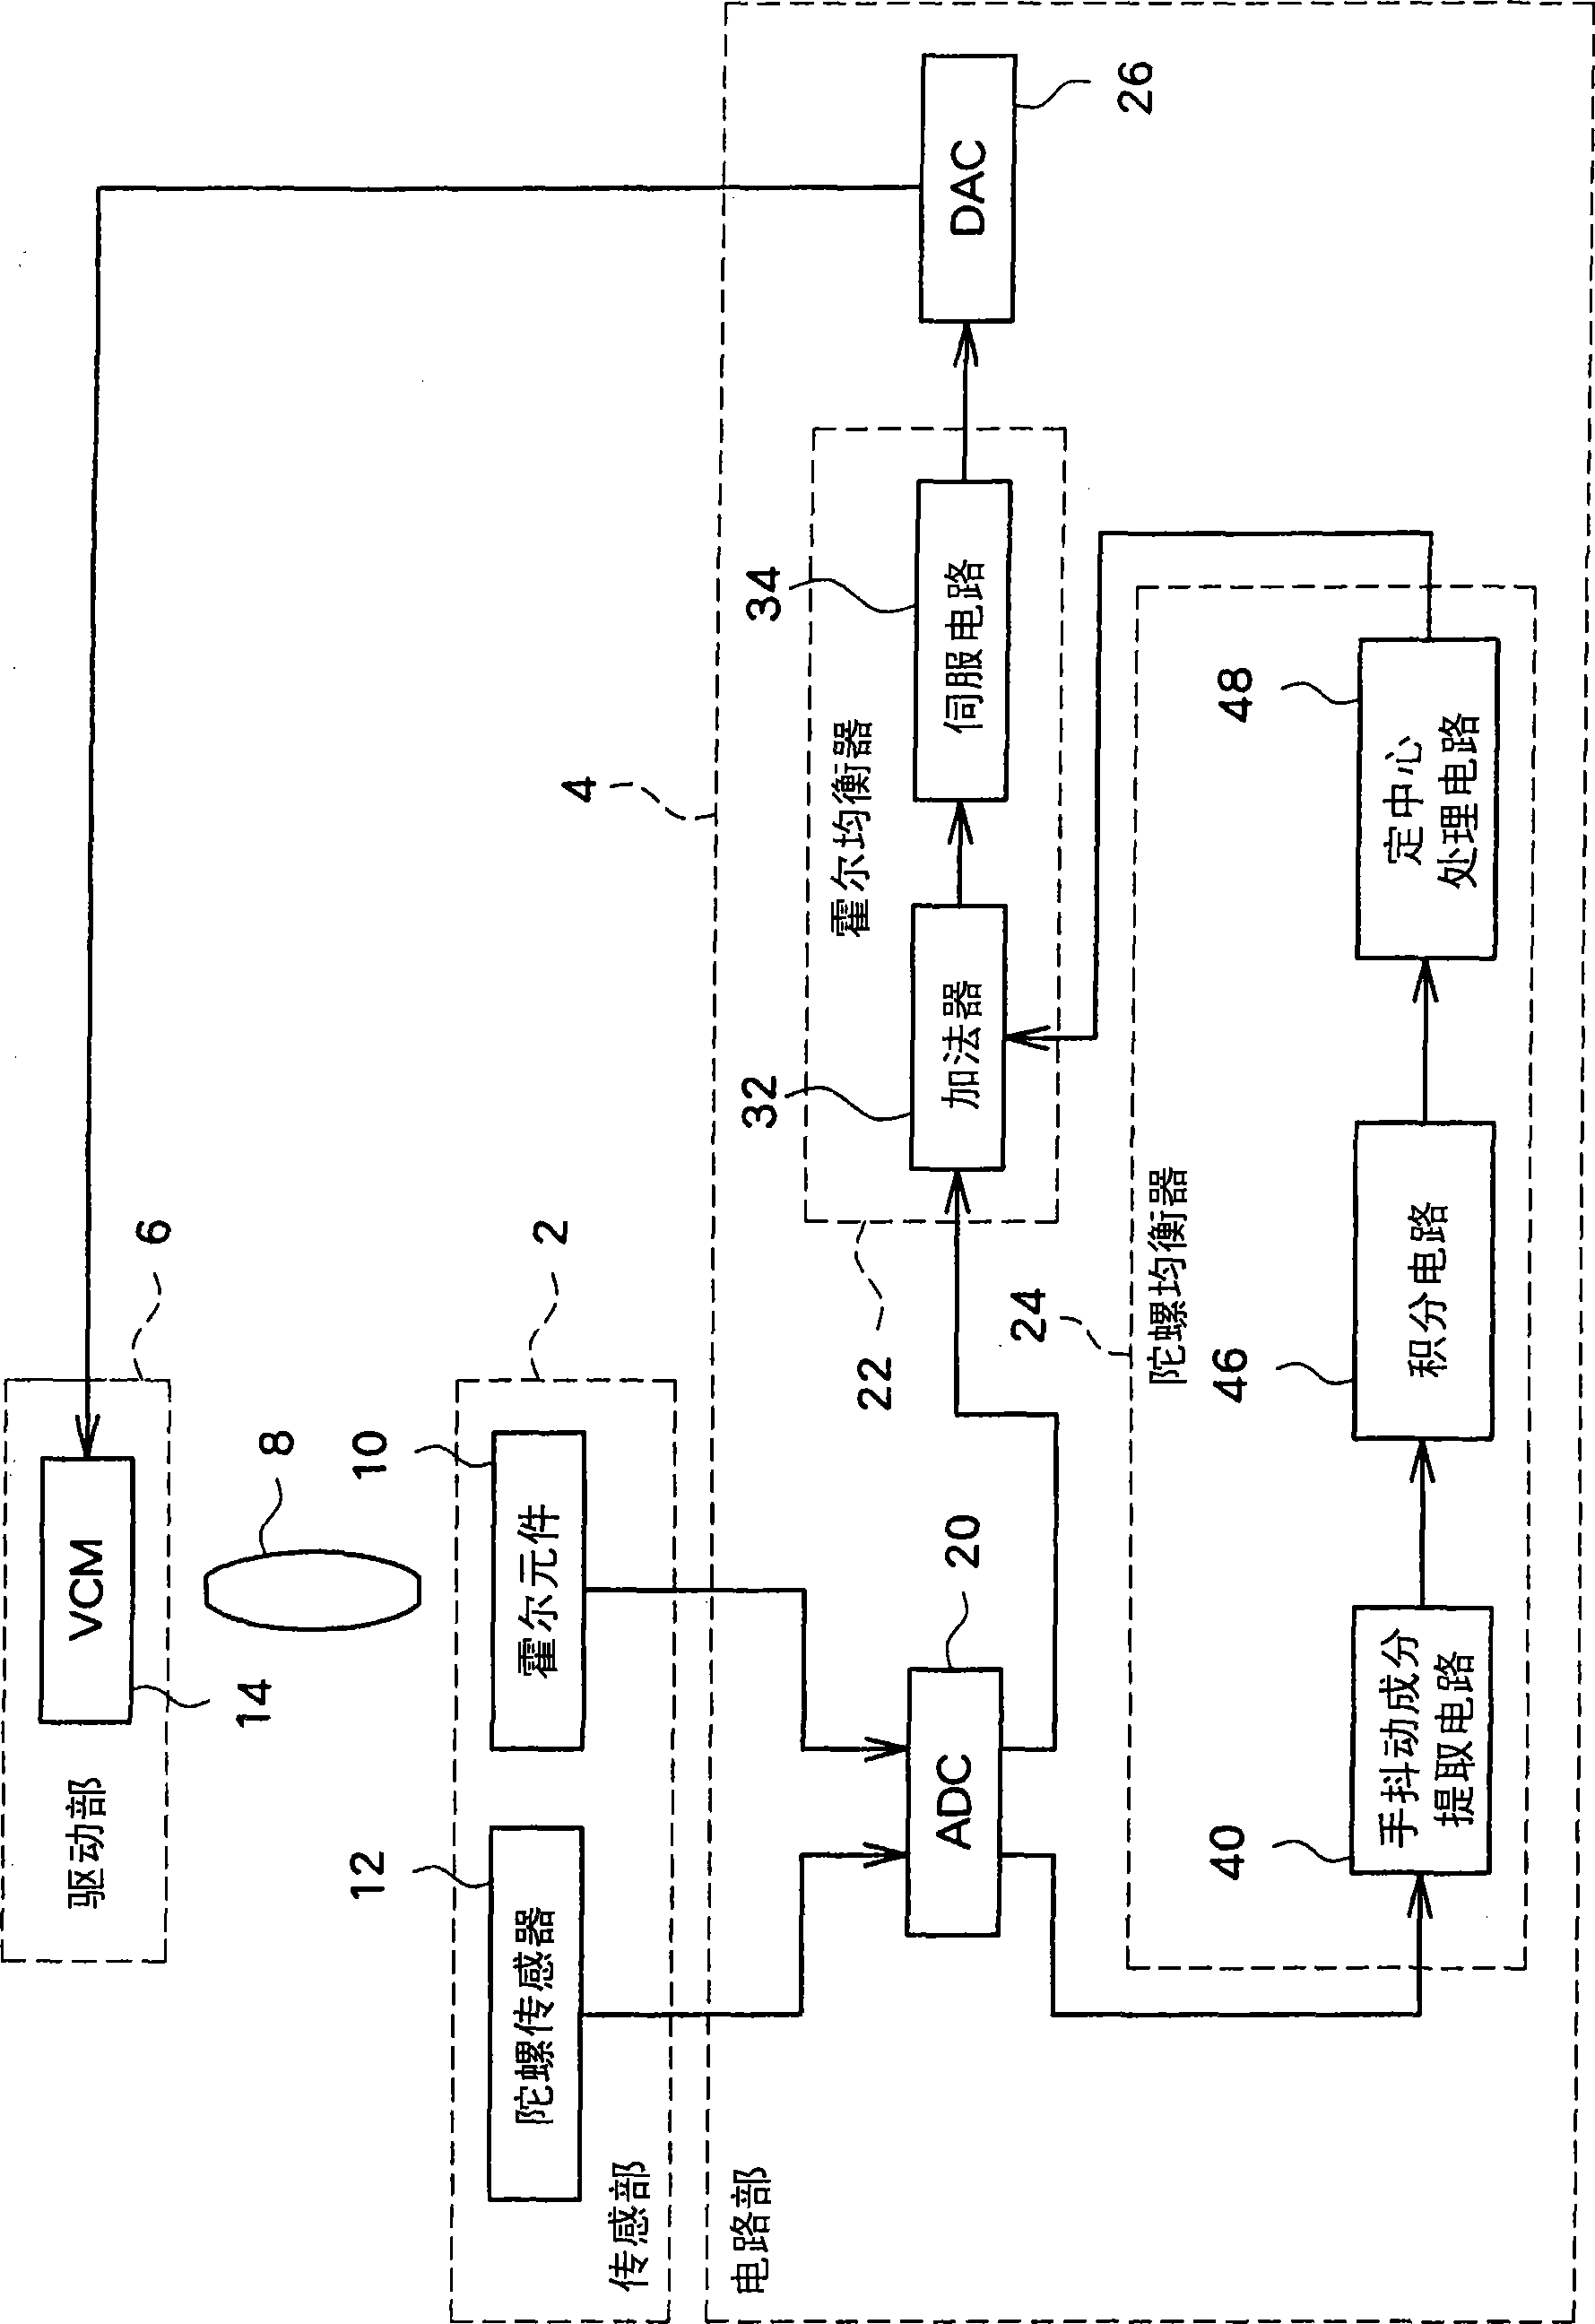 Image stabilization control circuit